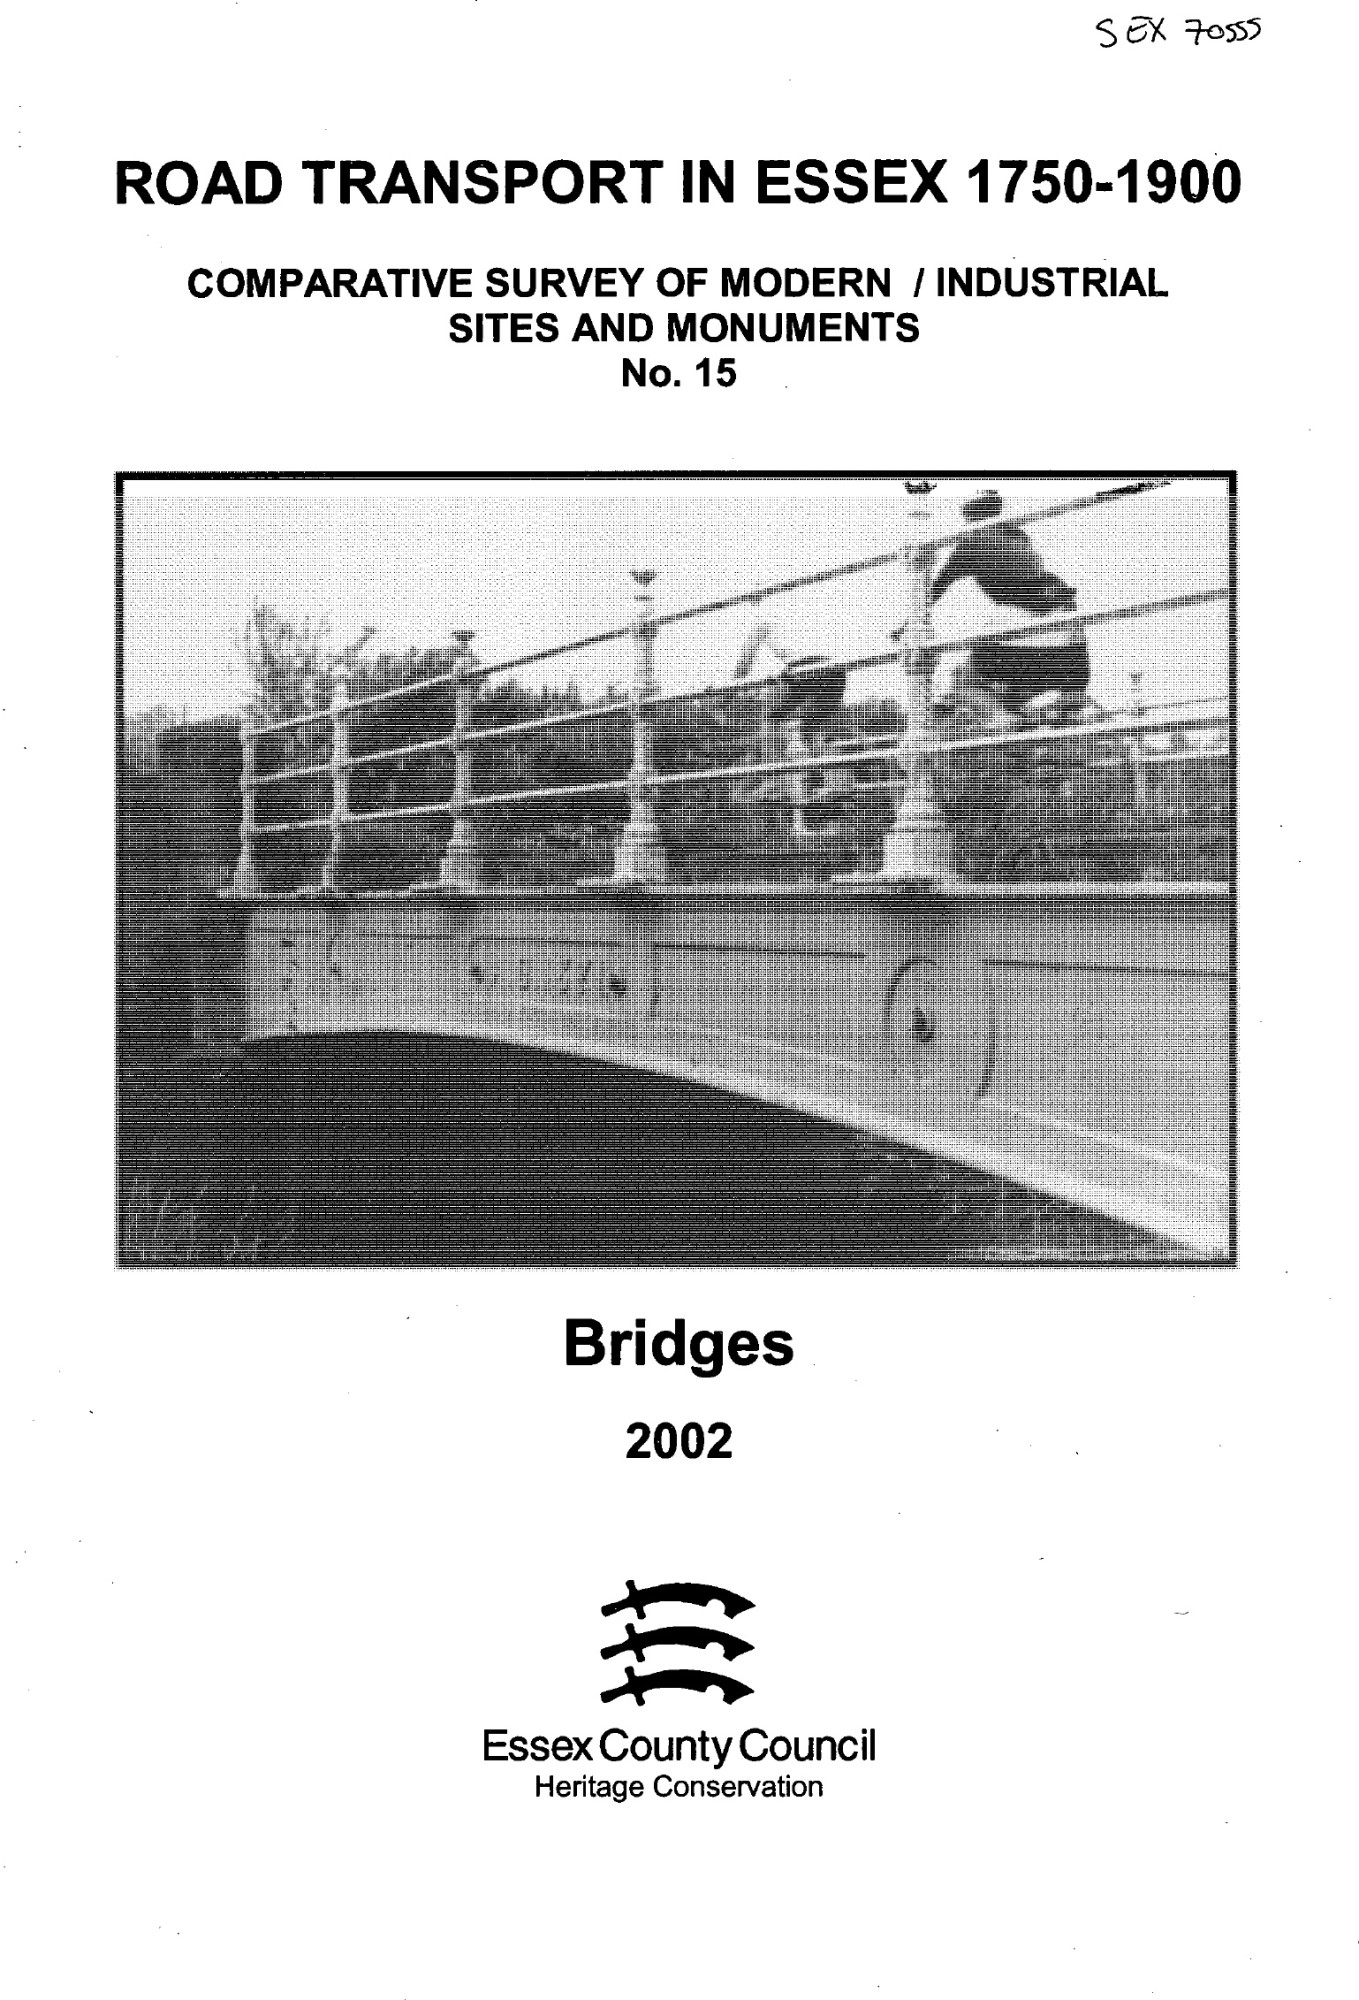 Road Transport in Essex 1750-1900: Bridges (2002) eiag illustration 1